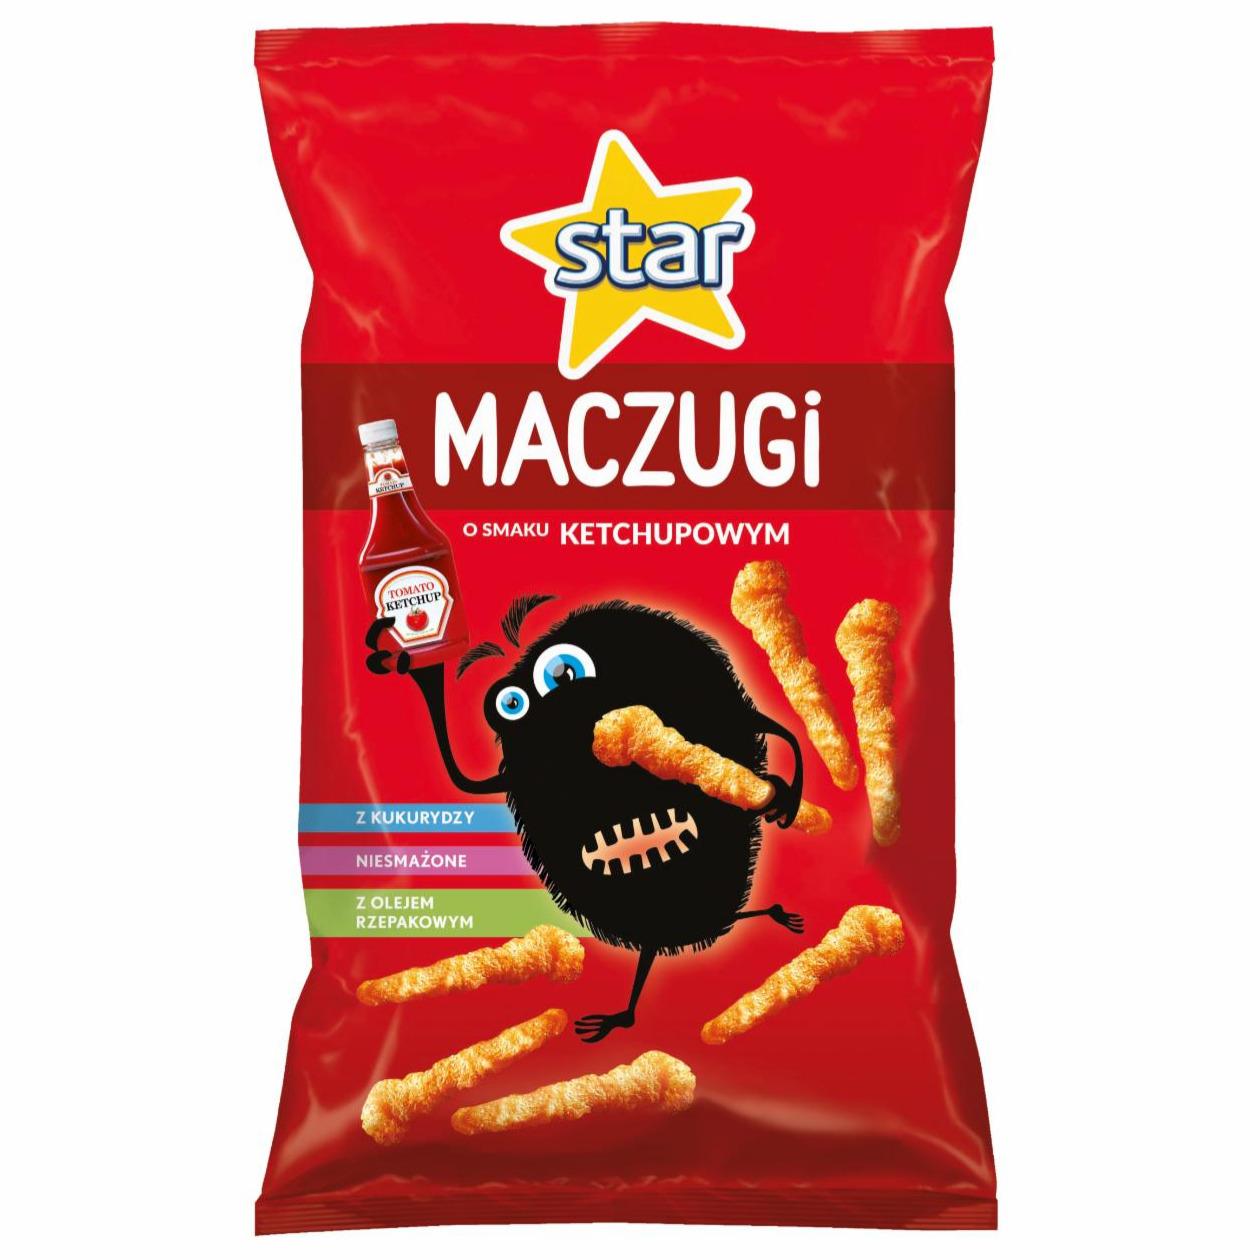 Zdjęcia - Star Maczugi Chrupki kukurydziane o smaku ketchup 80 g